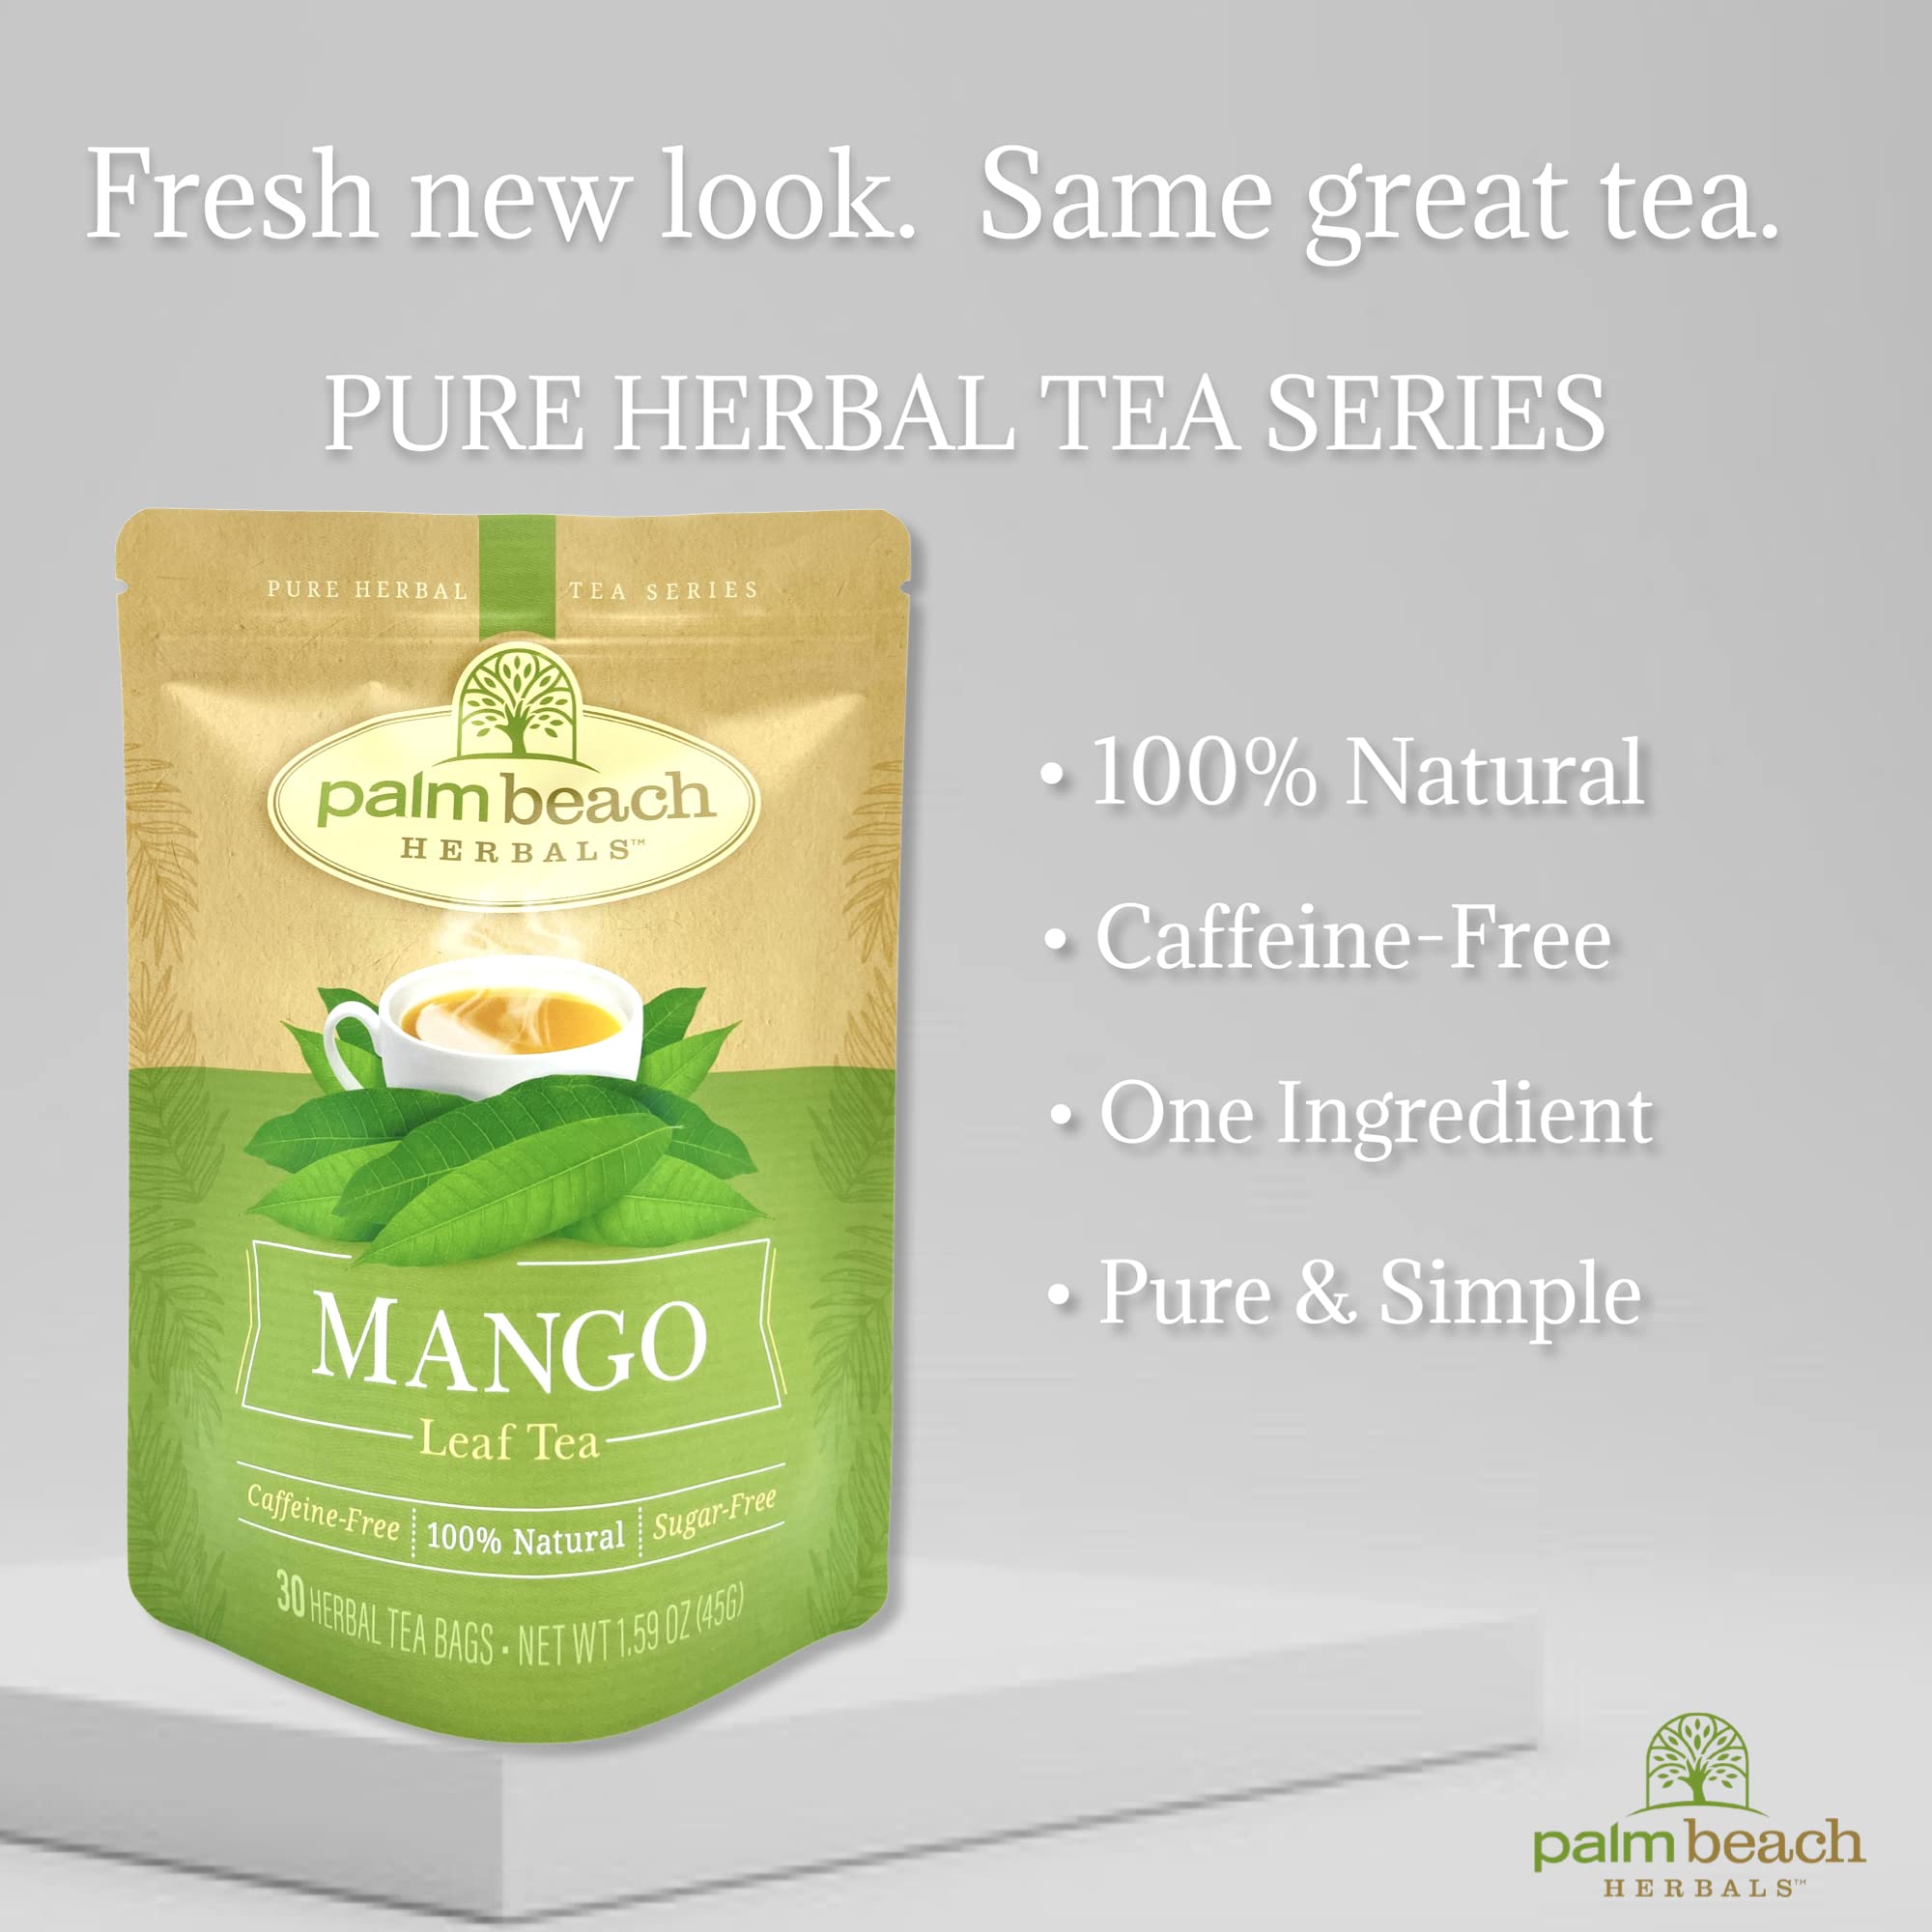 Mango Leaf Tea by Palm Beach Herbals, 30 Count Tea Bags, Caffeine-Free | Pure Herbal Tea Series